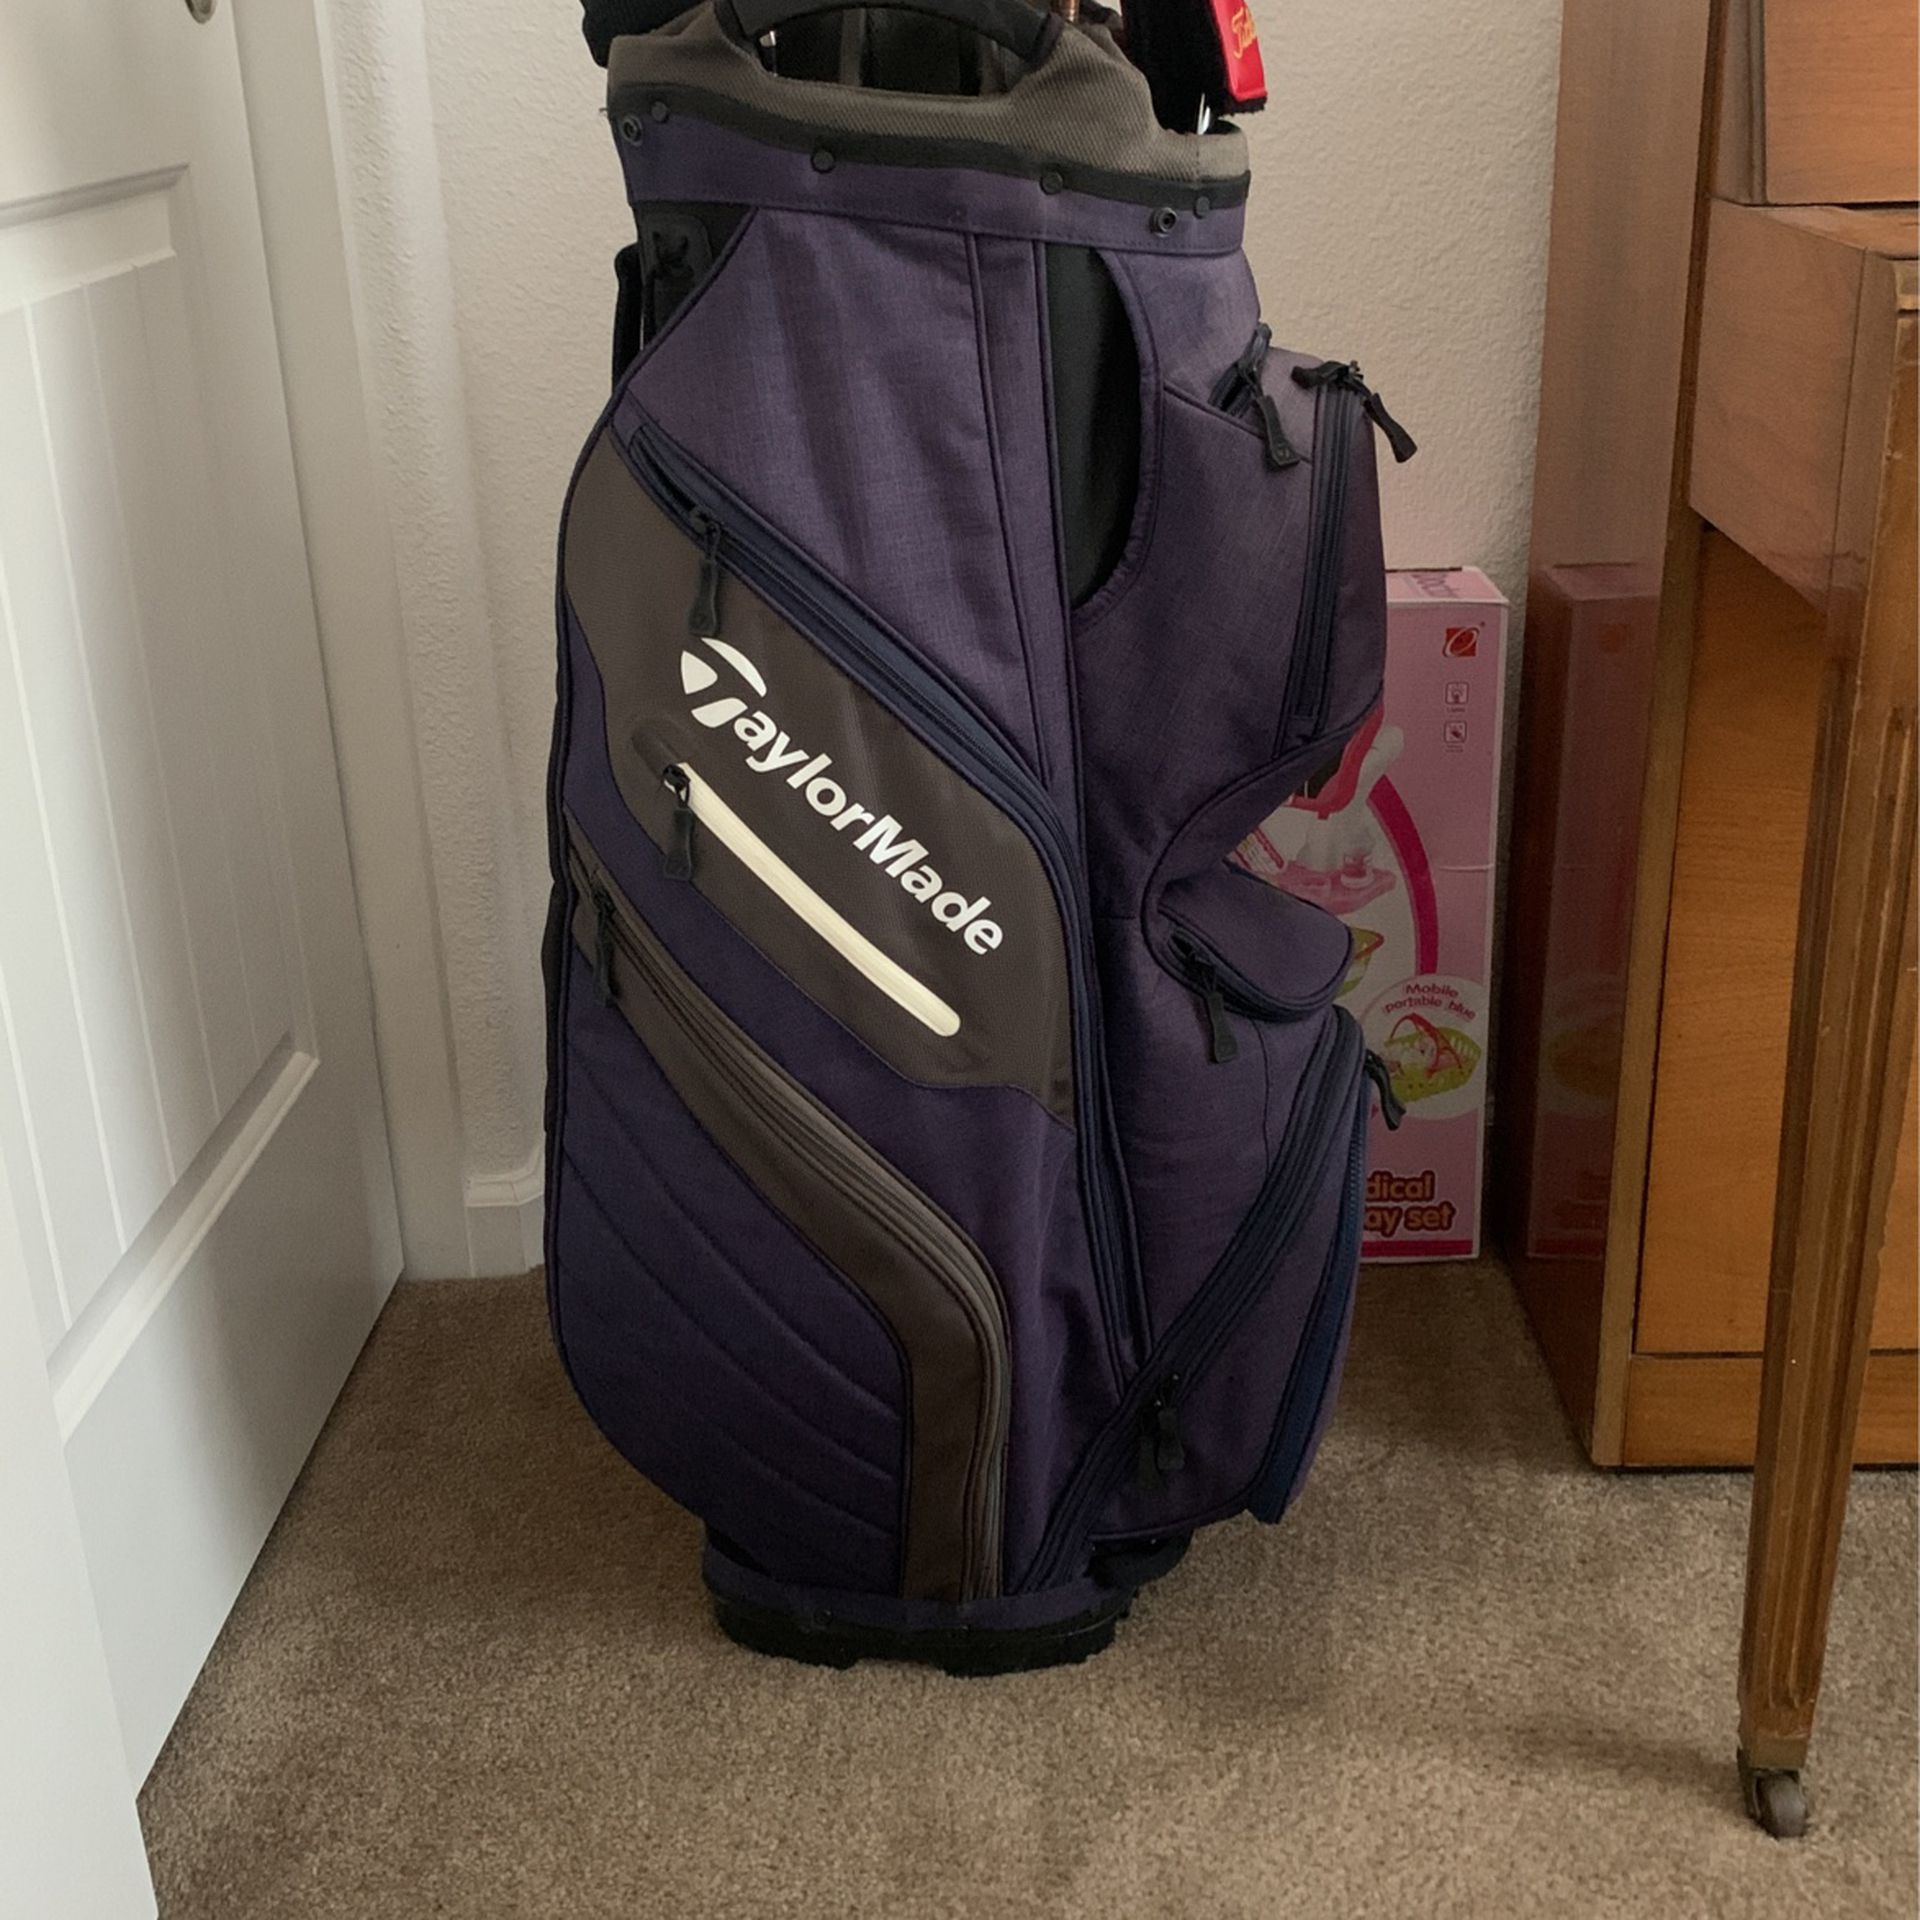 TaylorMade Supreme Golf Cart Bag